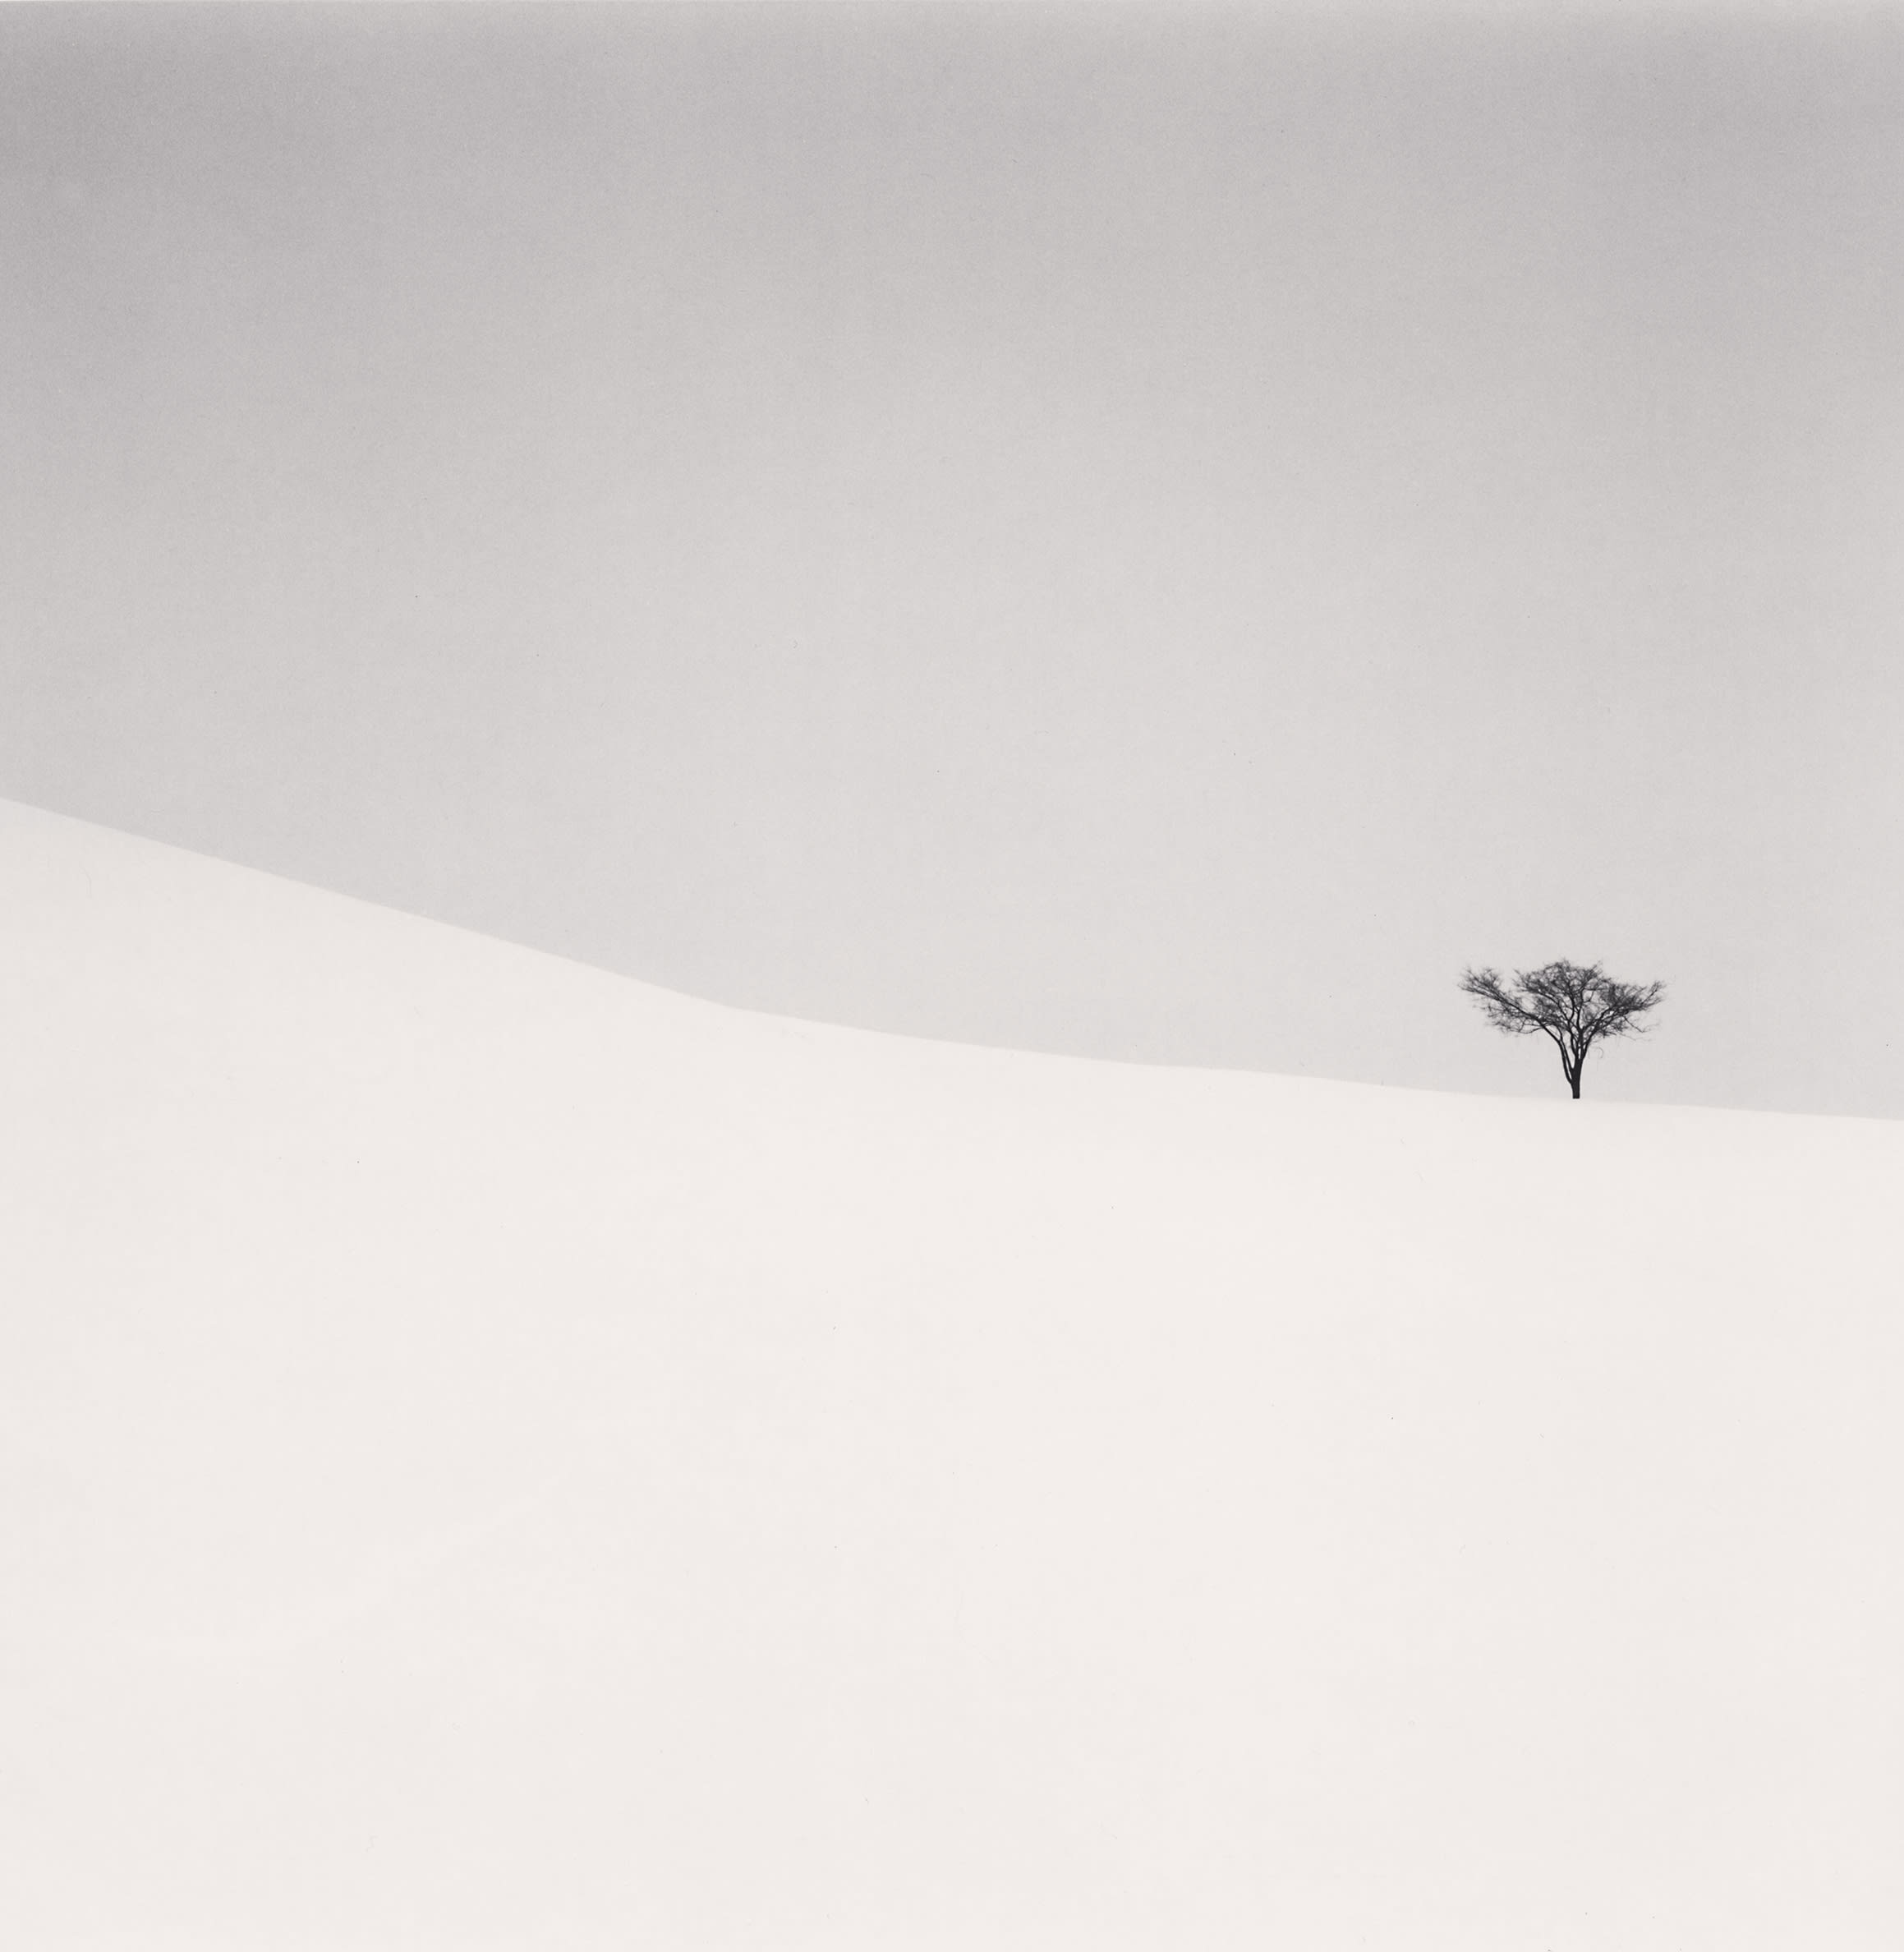 Michael Kenna, Single Tree, Mita, Hokkaido, Japan, 2007 | Ira Stehmann